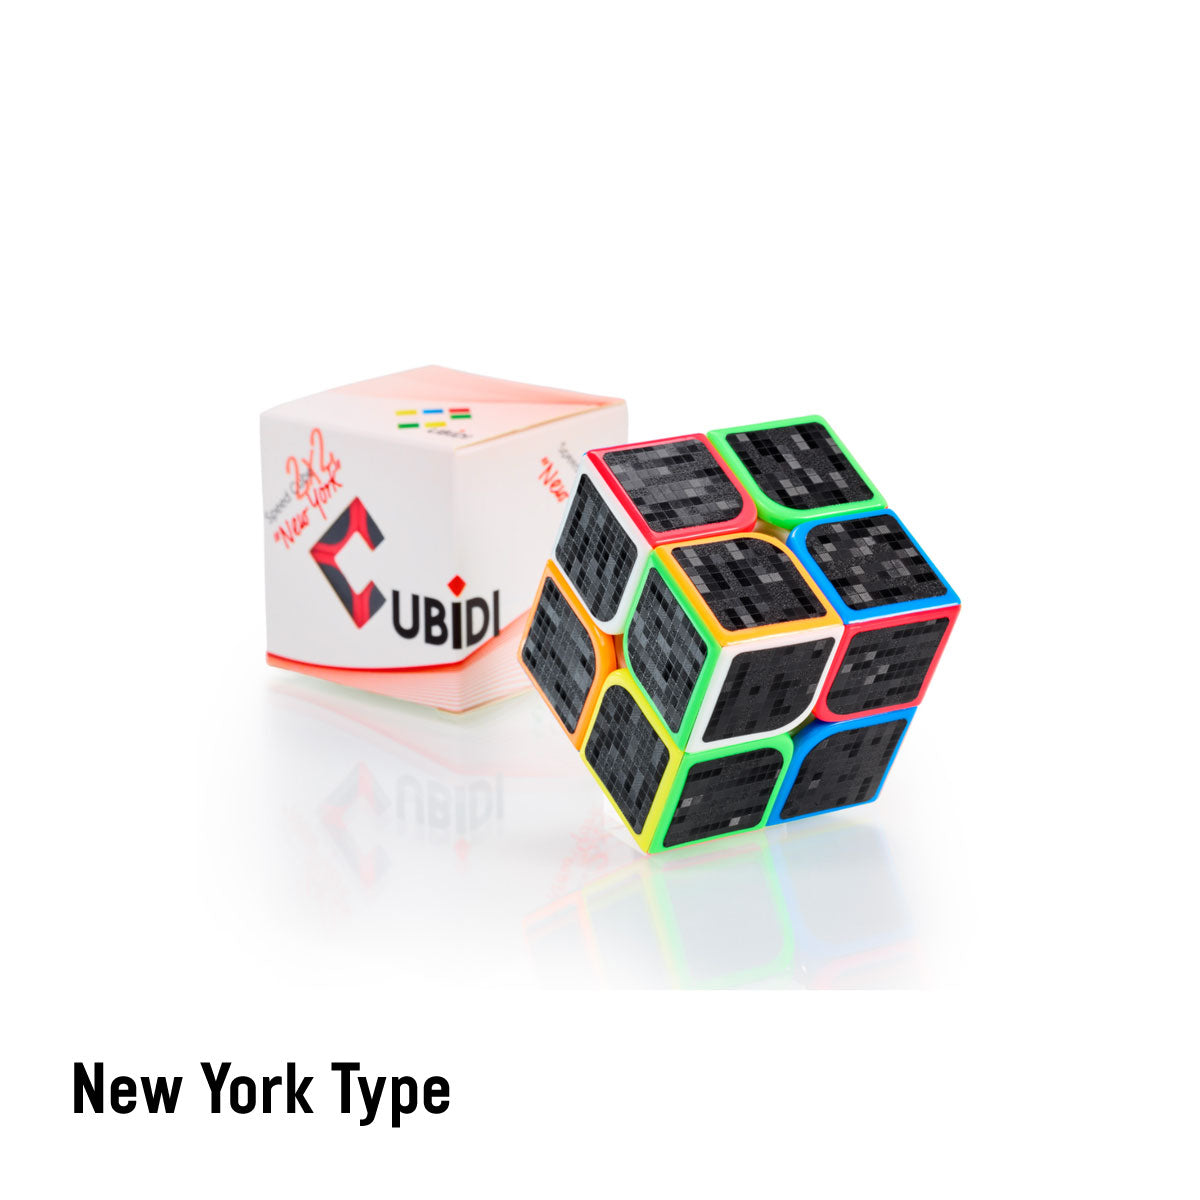 Cubidi 2x2 New York Magic Cube